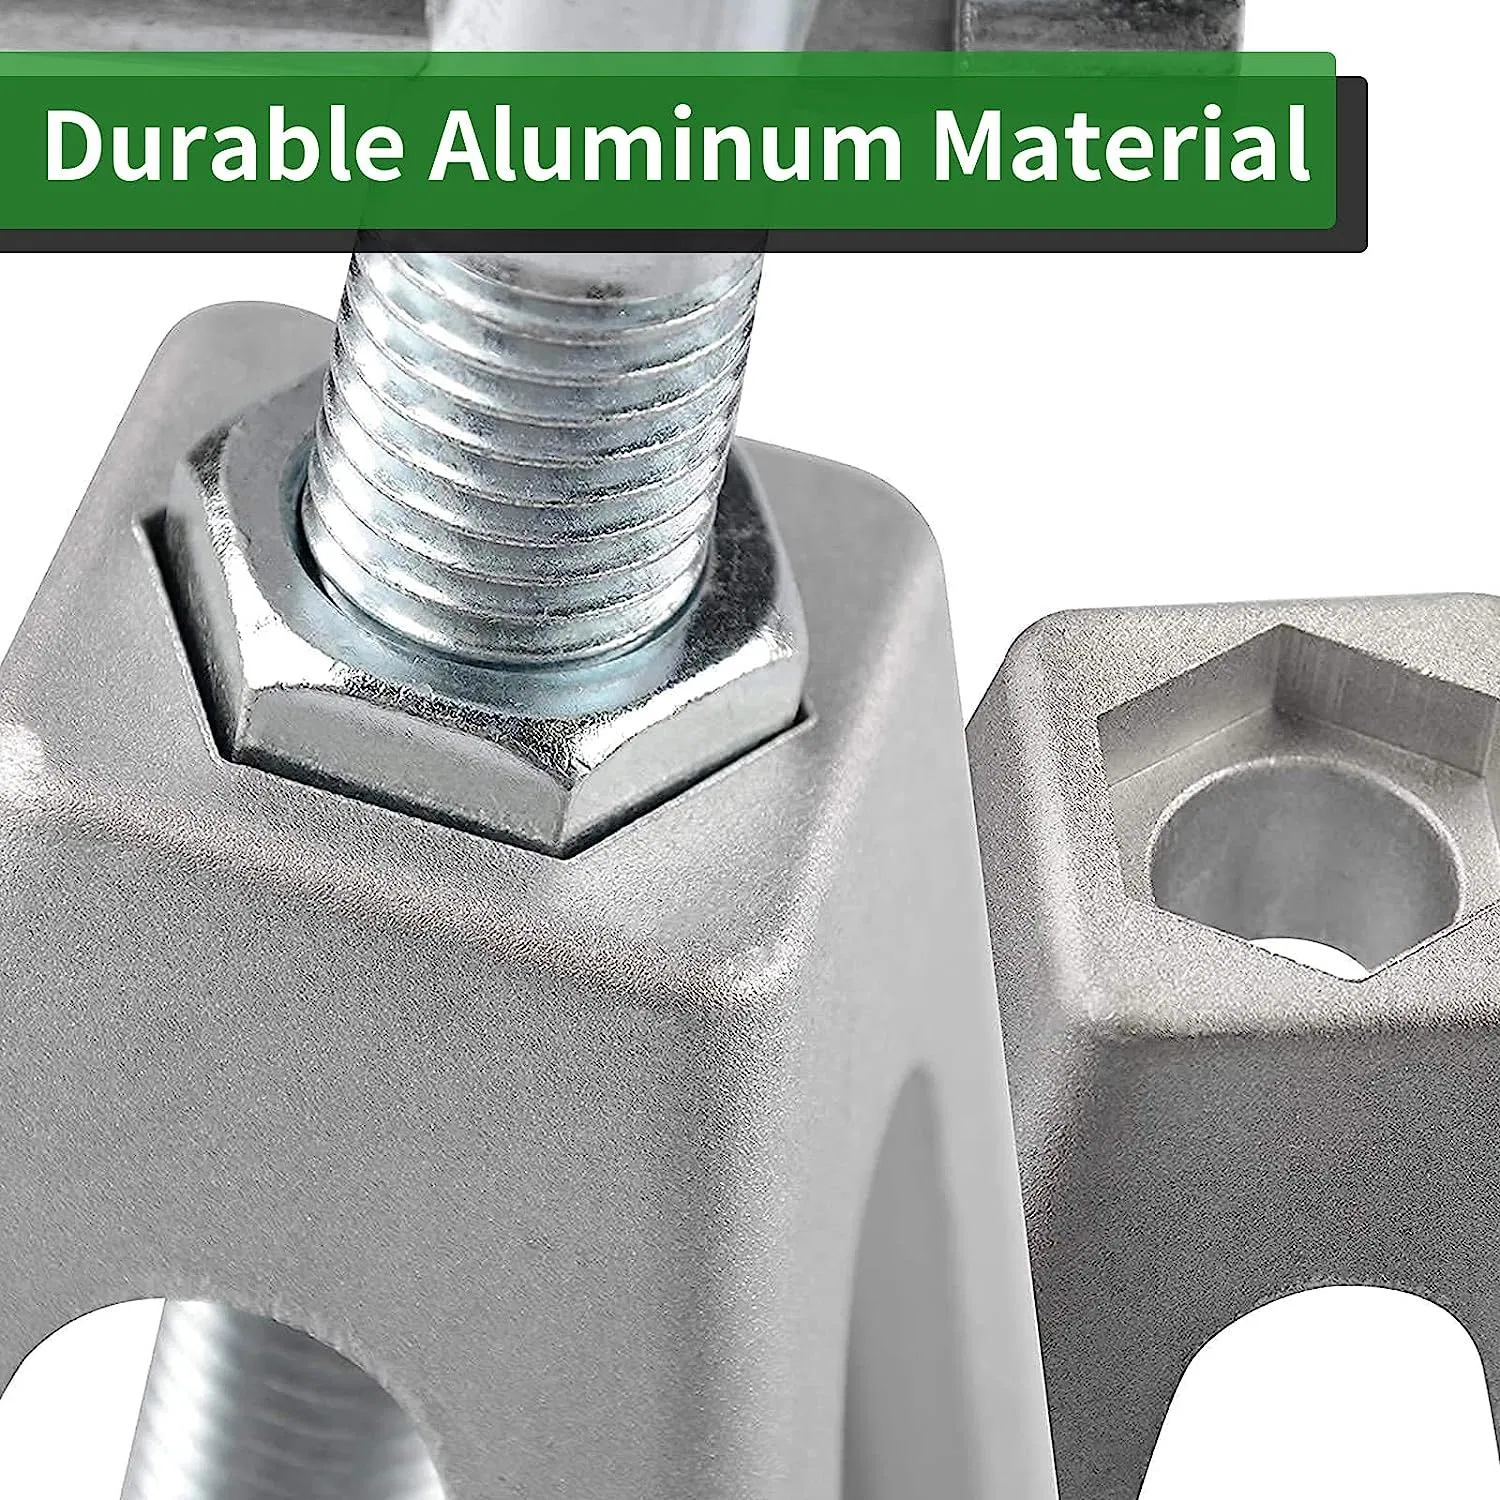 Aluminium Casting Machinery Part Trailer Stabilizer Jacks for RV